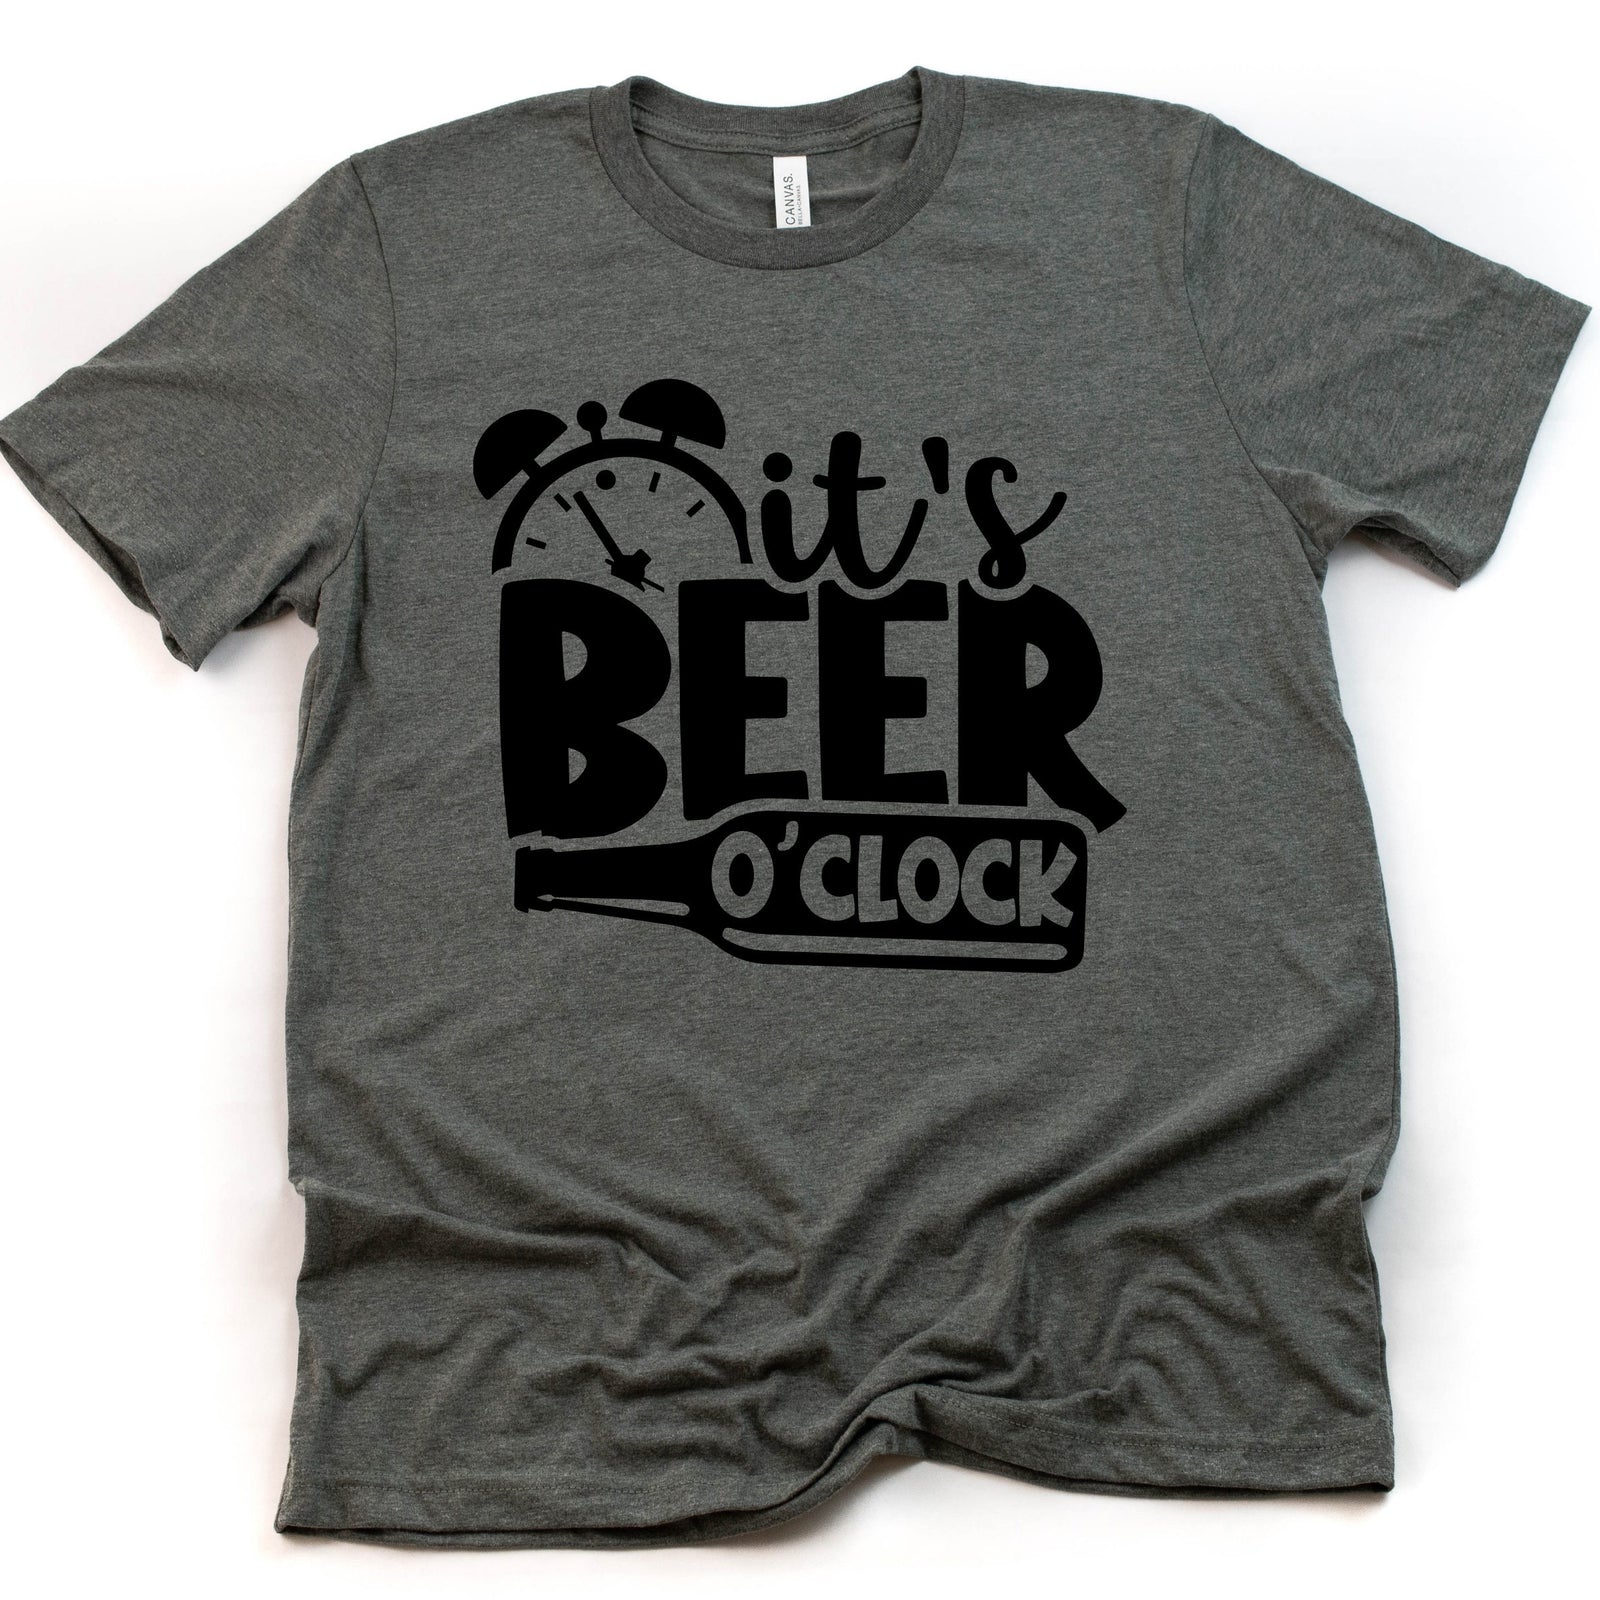 It's Beer O'clock T Shirt- Funny Men's T-shirt - Beer Lover Shirt - Beer Humor Statement Shirt - Beer Drinker Shirt